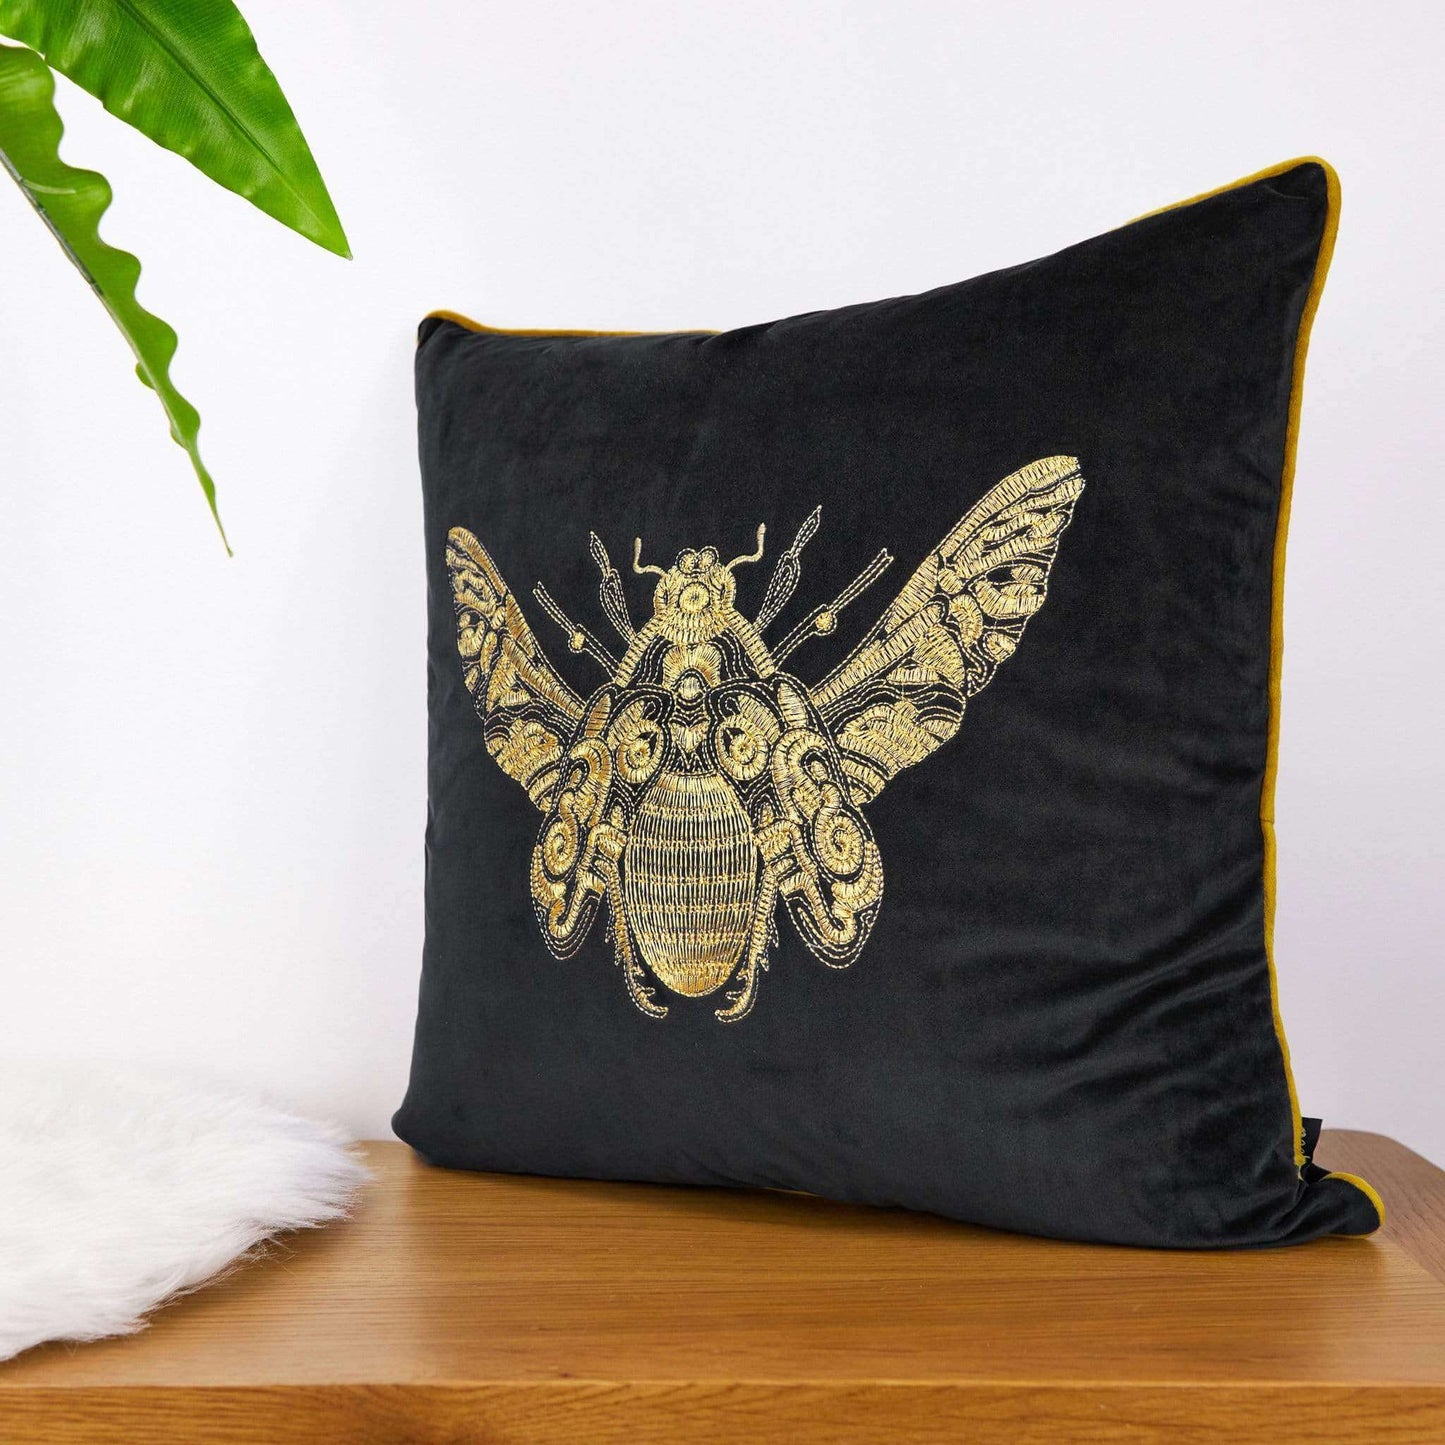 Homeware  -  Cerana Black Velvet Bumble Bee Cushion  -  50148007